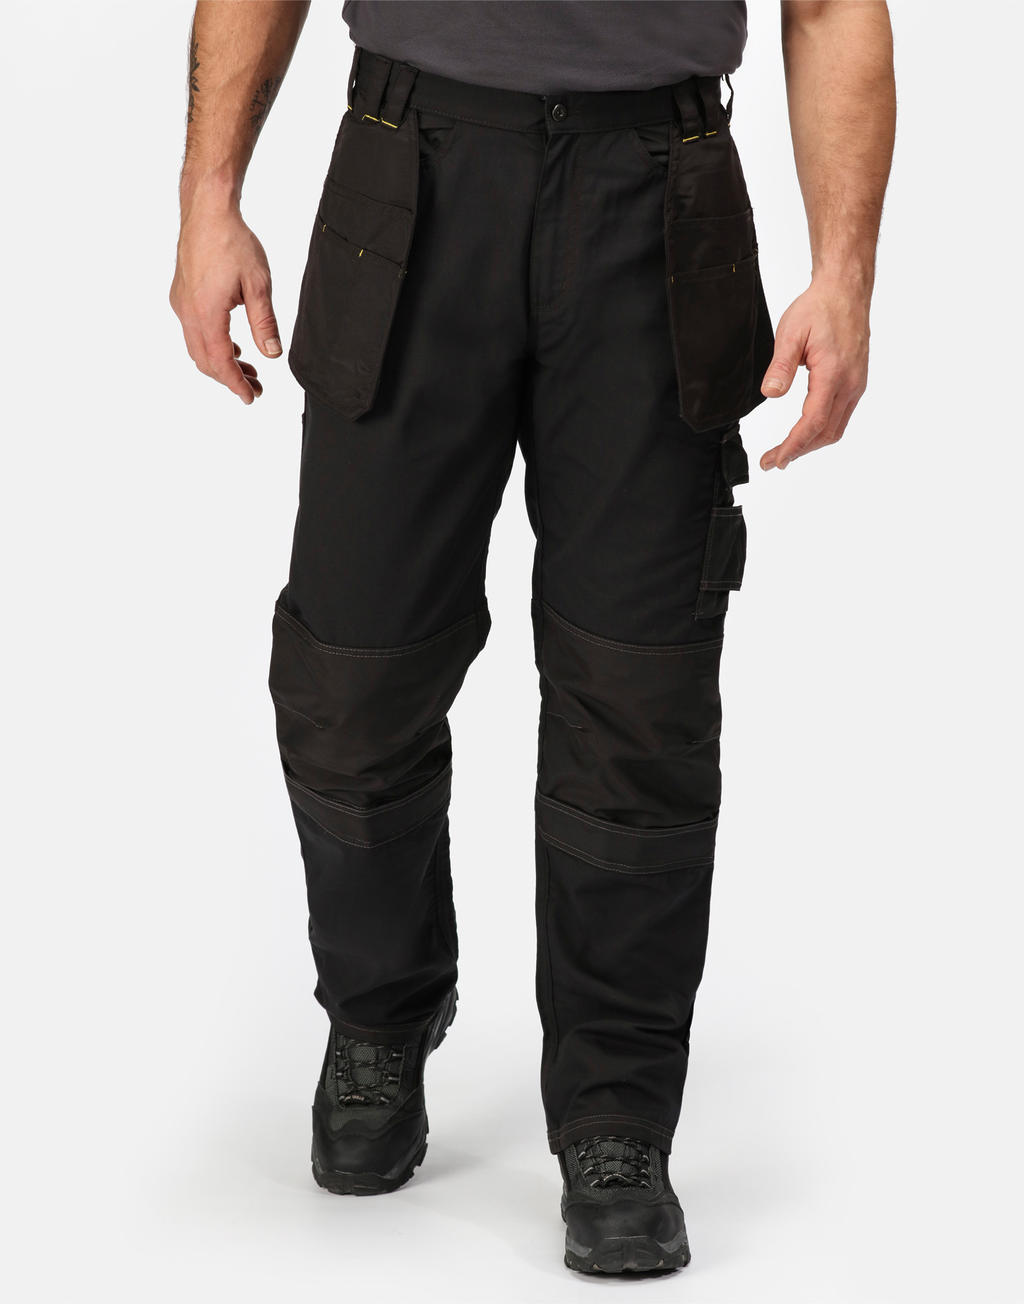  Hardware Holster Trouser (Large) in Farbe Black